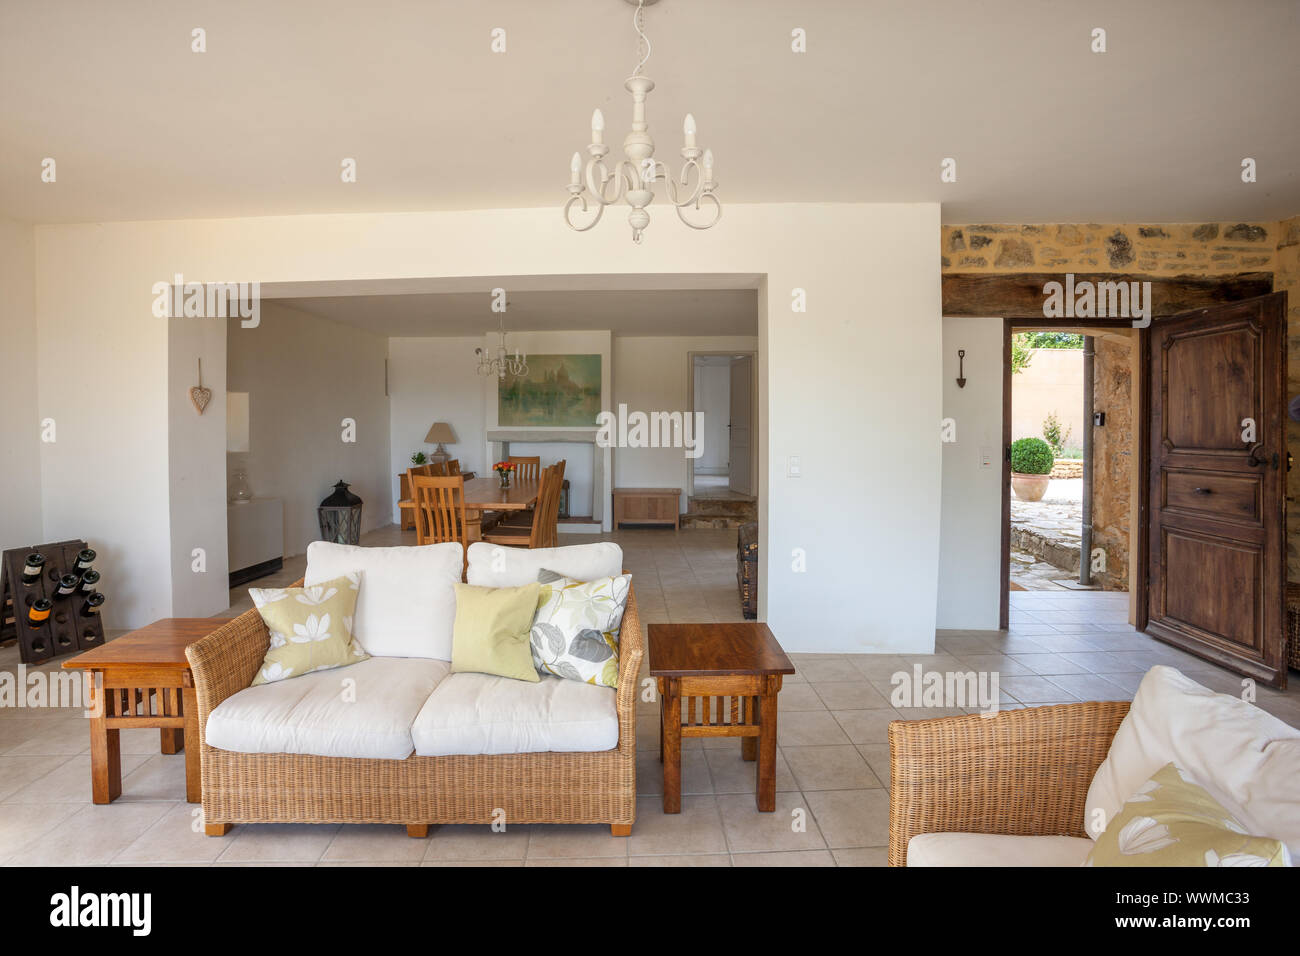 Beatiful home interior with garden views Stock Photo